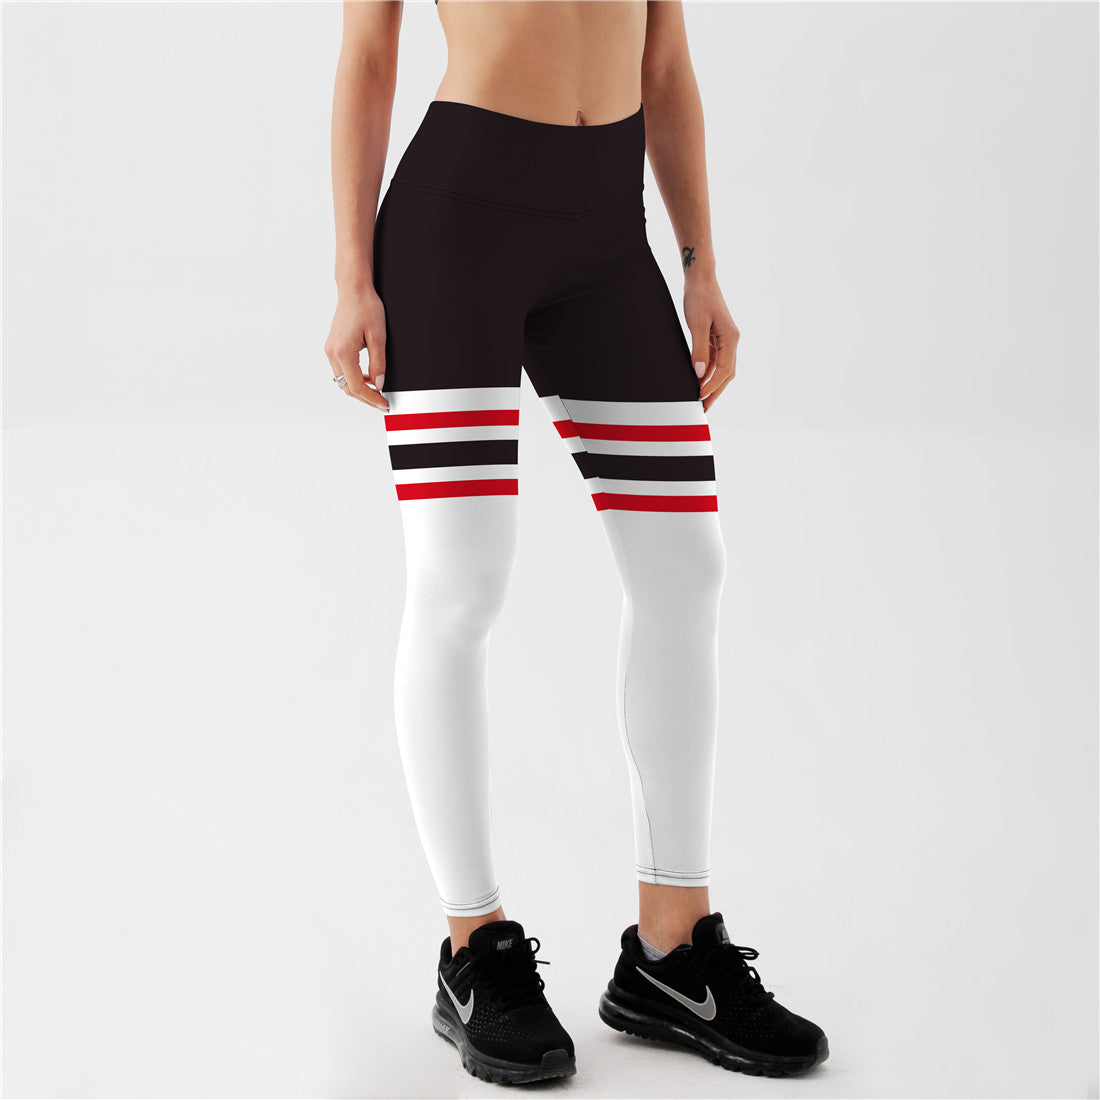 High Socks Athletic Leggings – Lotus Leggings